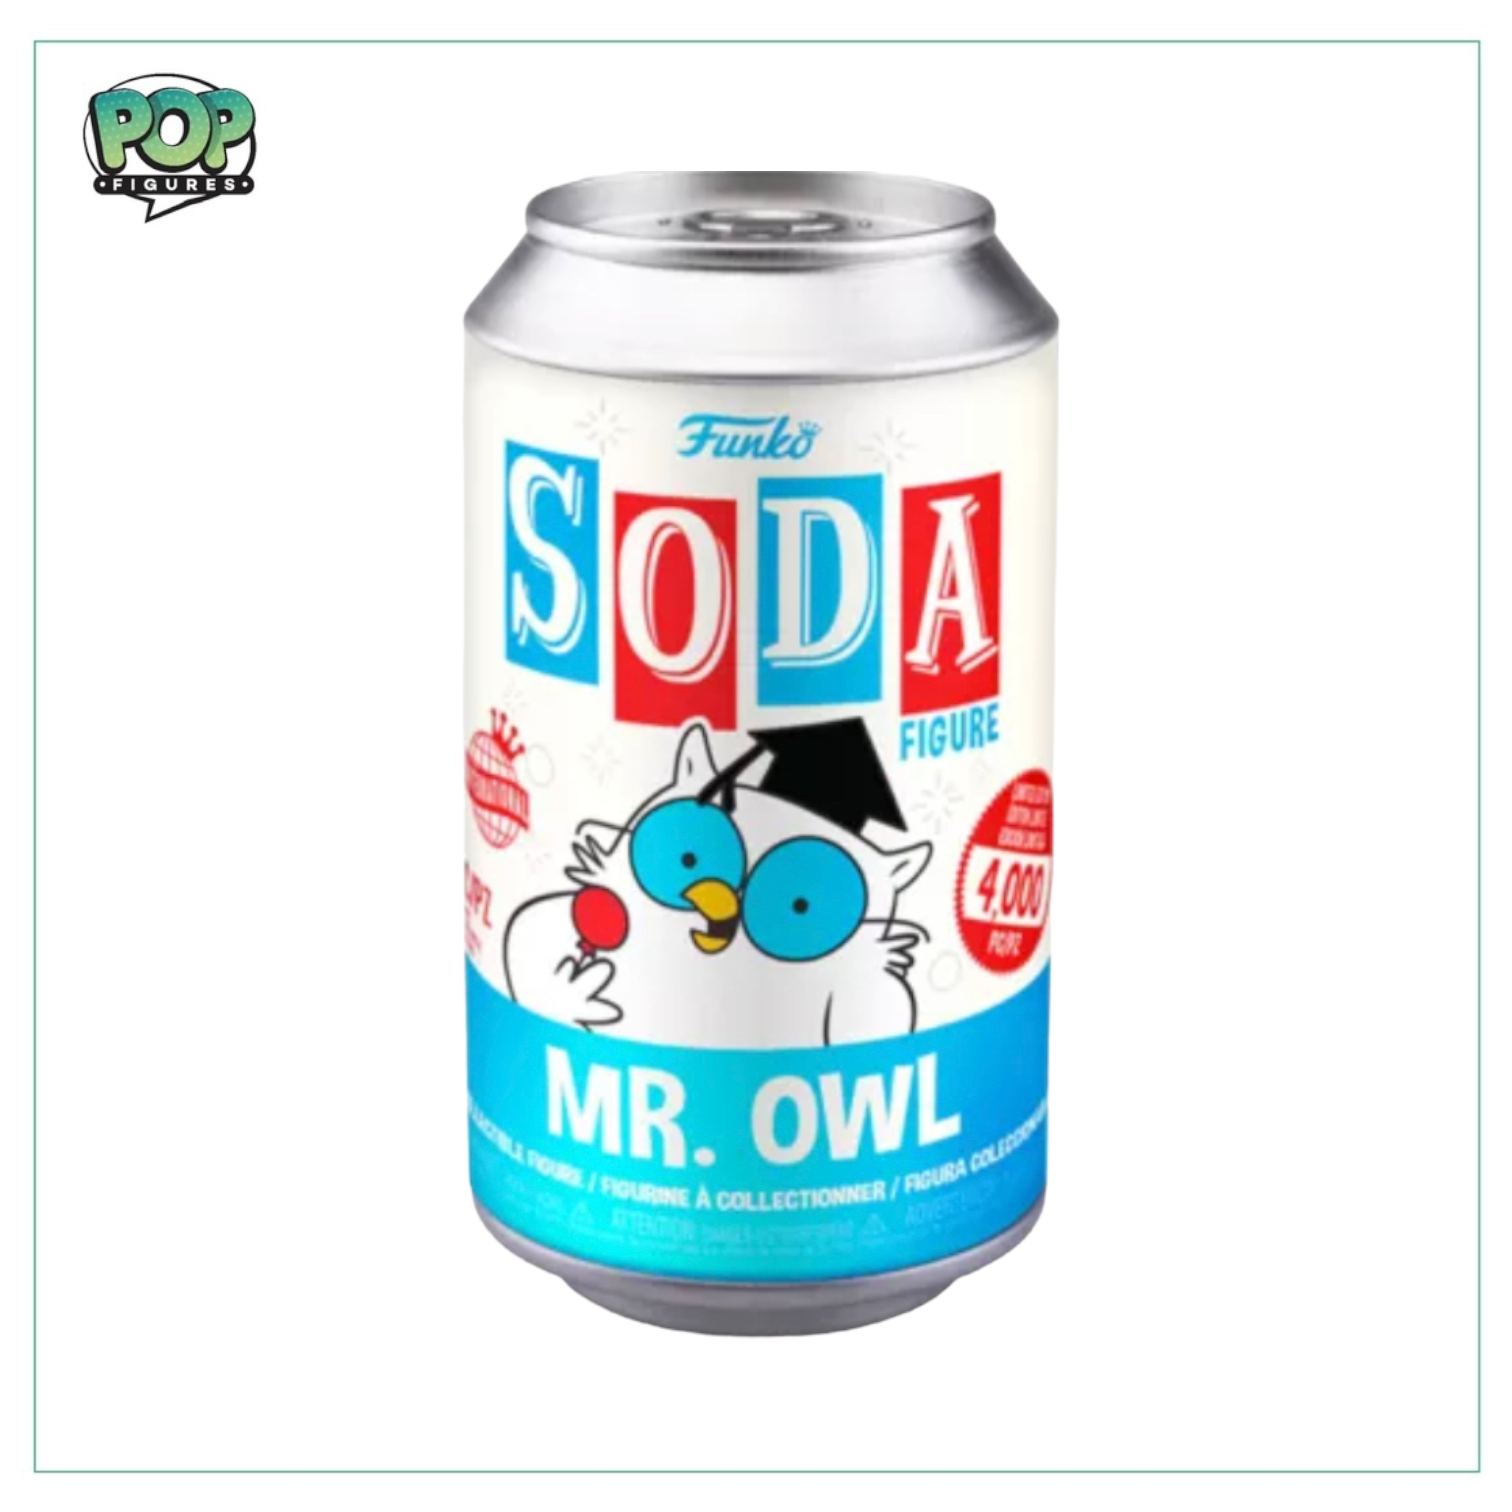 Mr. Owl Funko Soda Vinyl Figure! Ad Icons - LE4000 Pcs International - Chance Of Chase